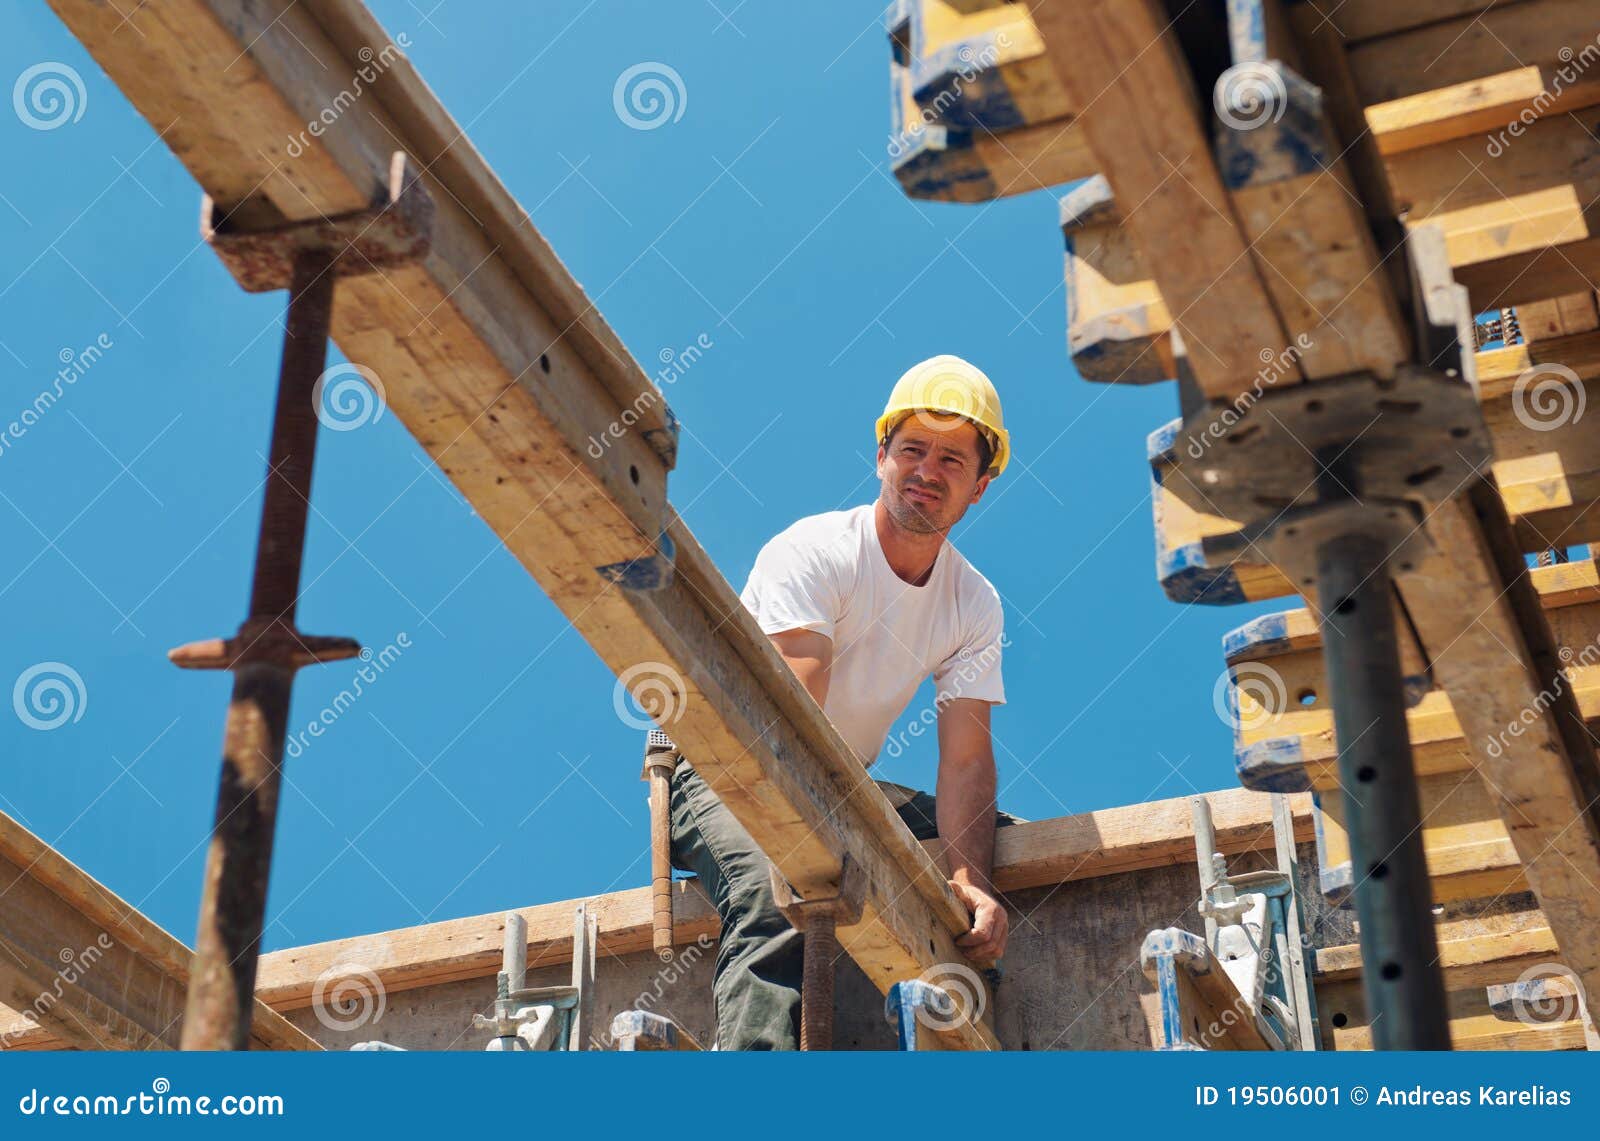 construction worker placing formwork beams